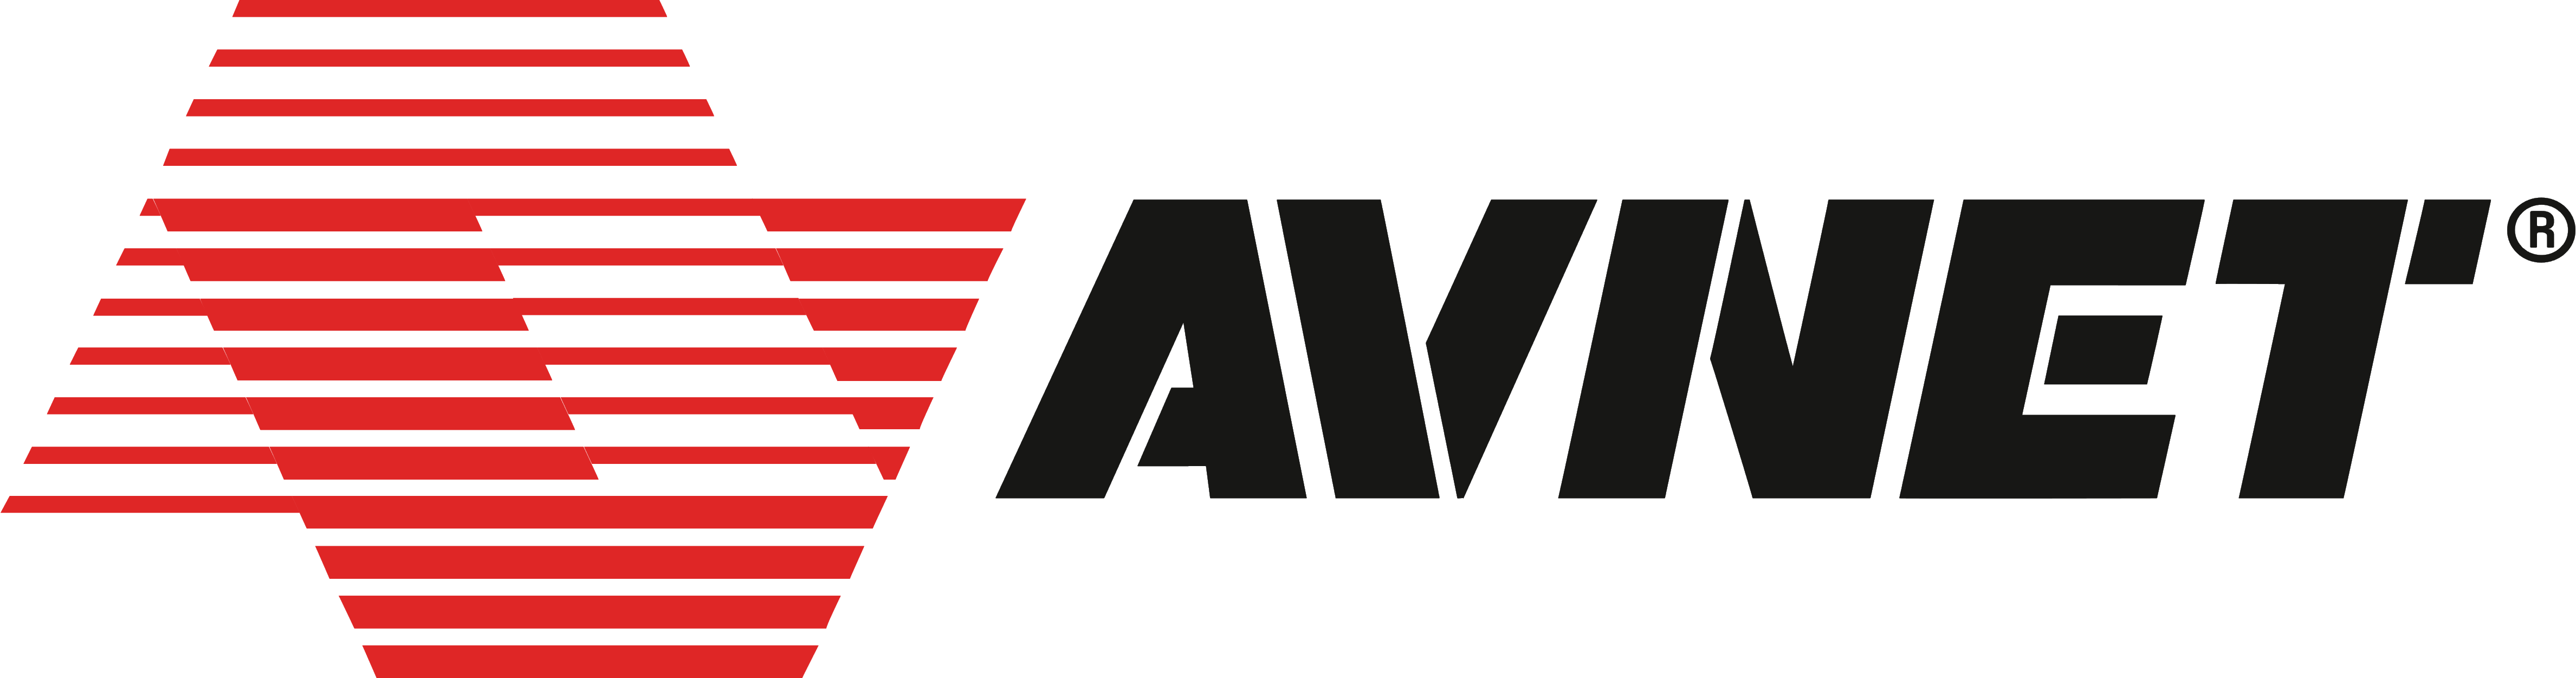 Avnet Png And Avnet Transpare